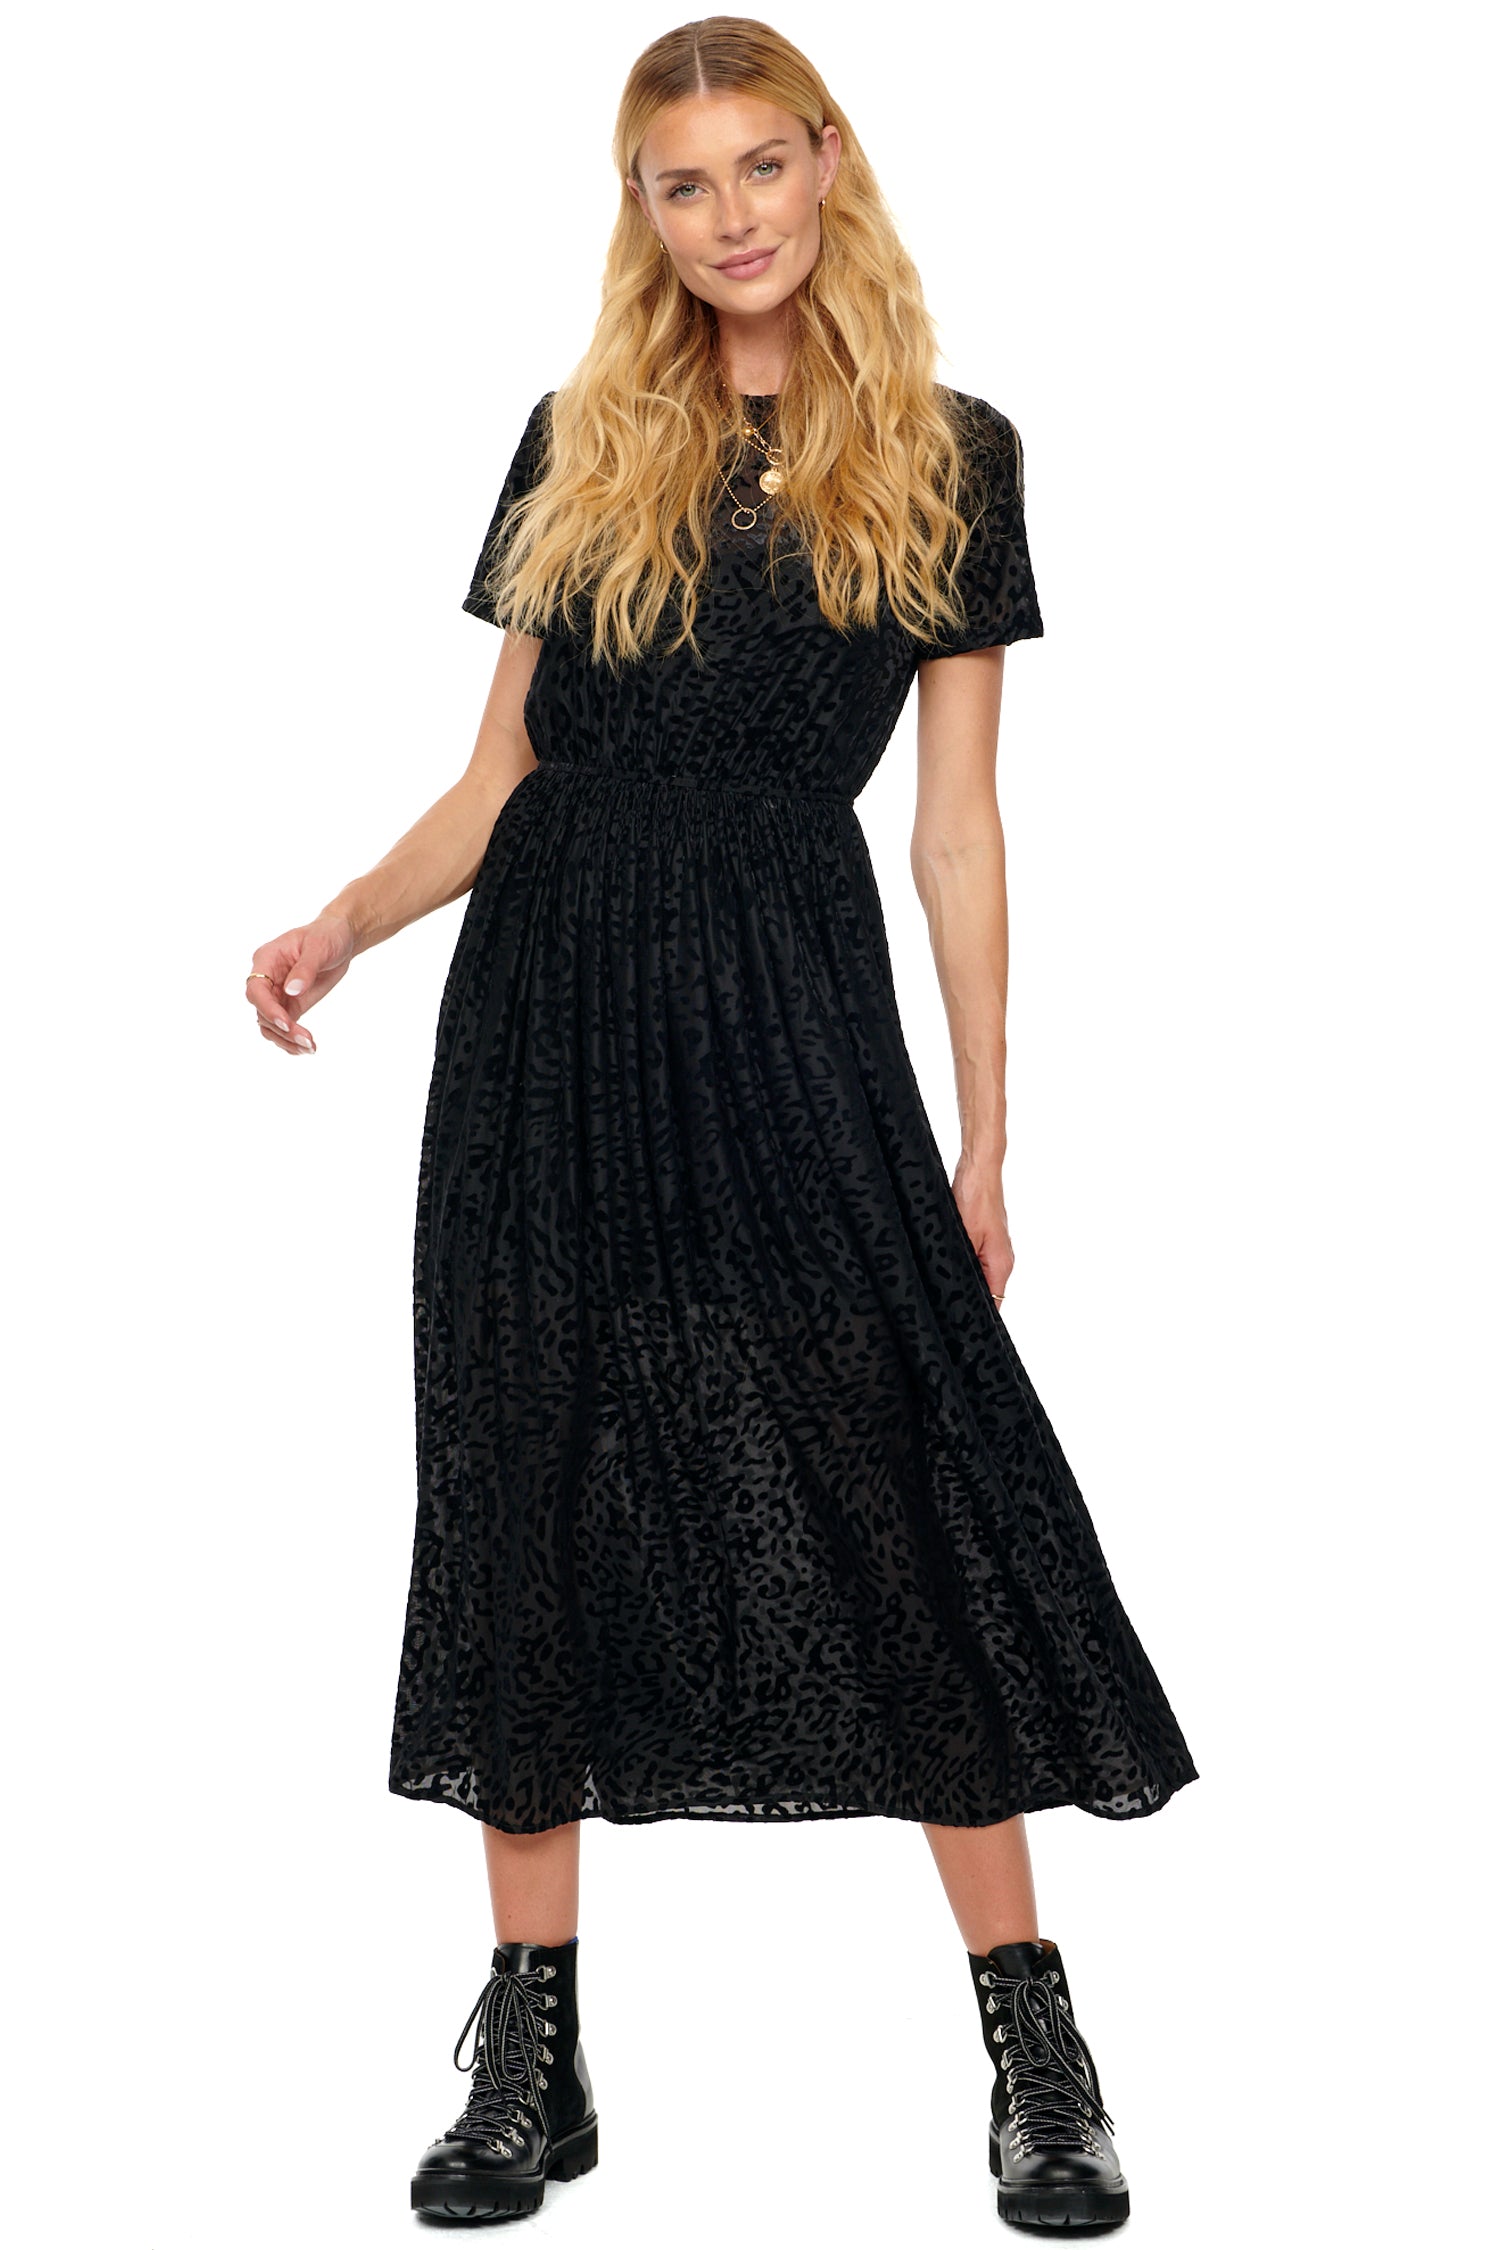 Model wearing Black Animal Devoree Dress standing facing the camera